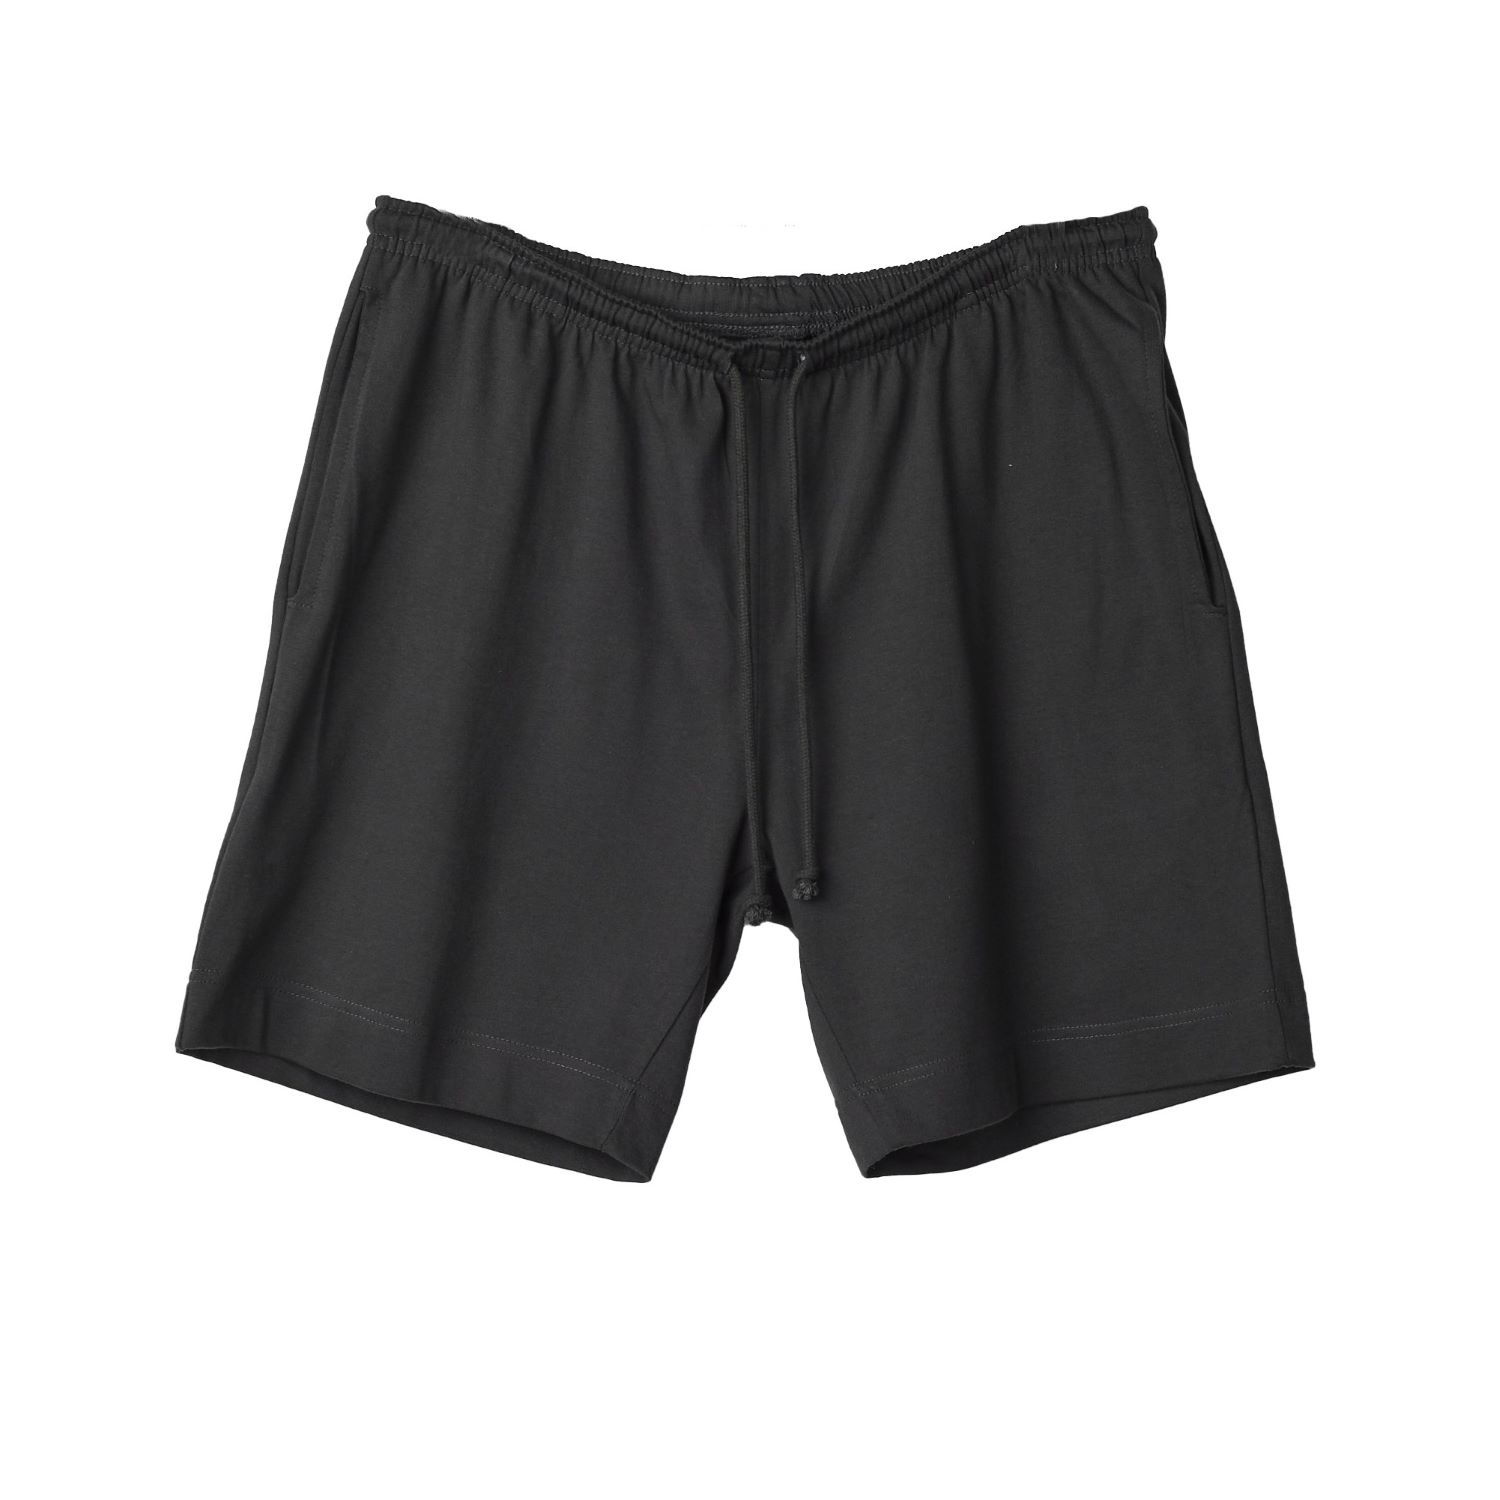 Uskees Men's Drawstring Shorts - Faded Black